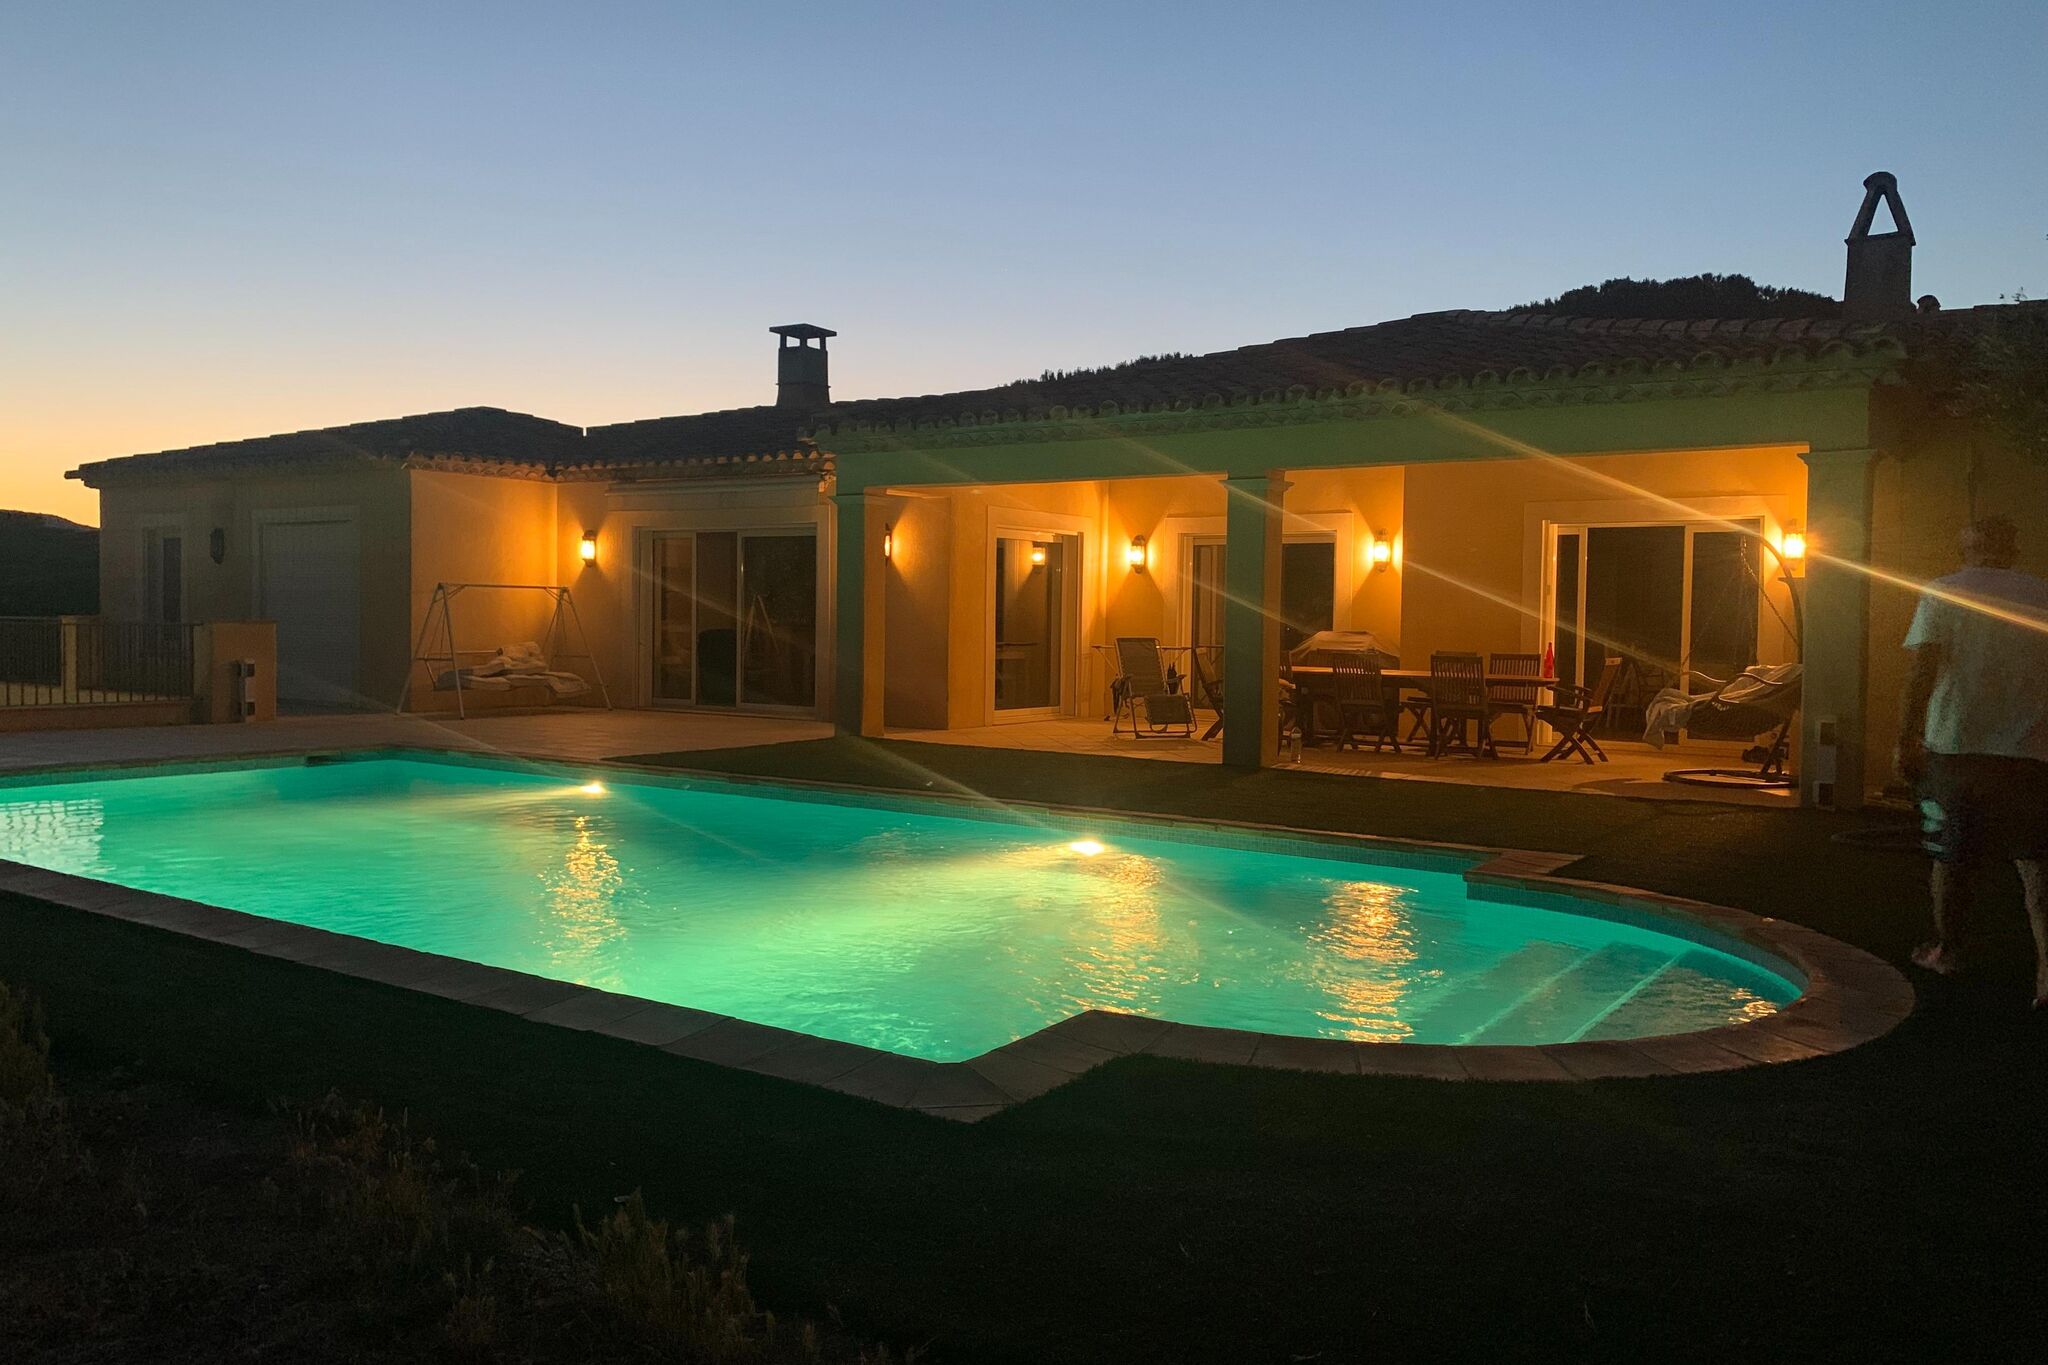 Beautiful villa in Sainte-Maxime with a pool